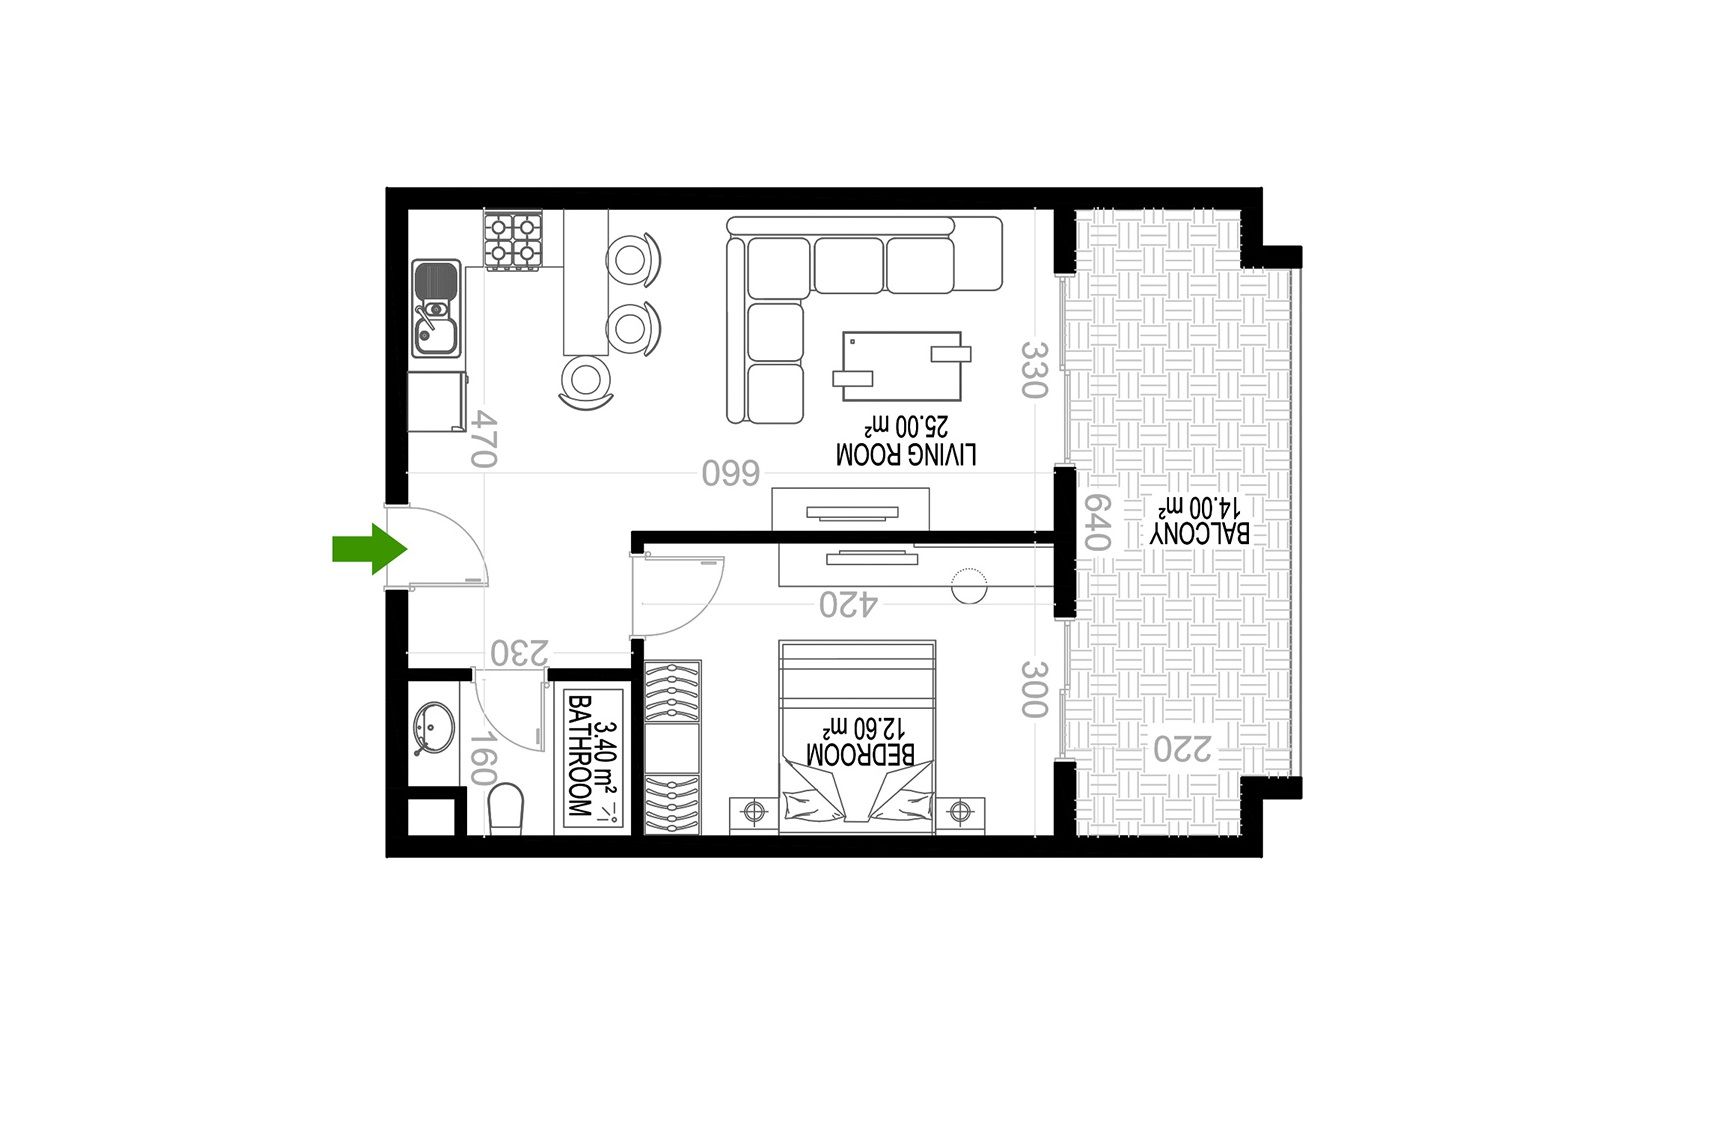 1 bedroom apartment in large-scale complex - Mahmutlar district